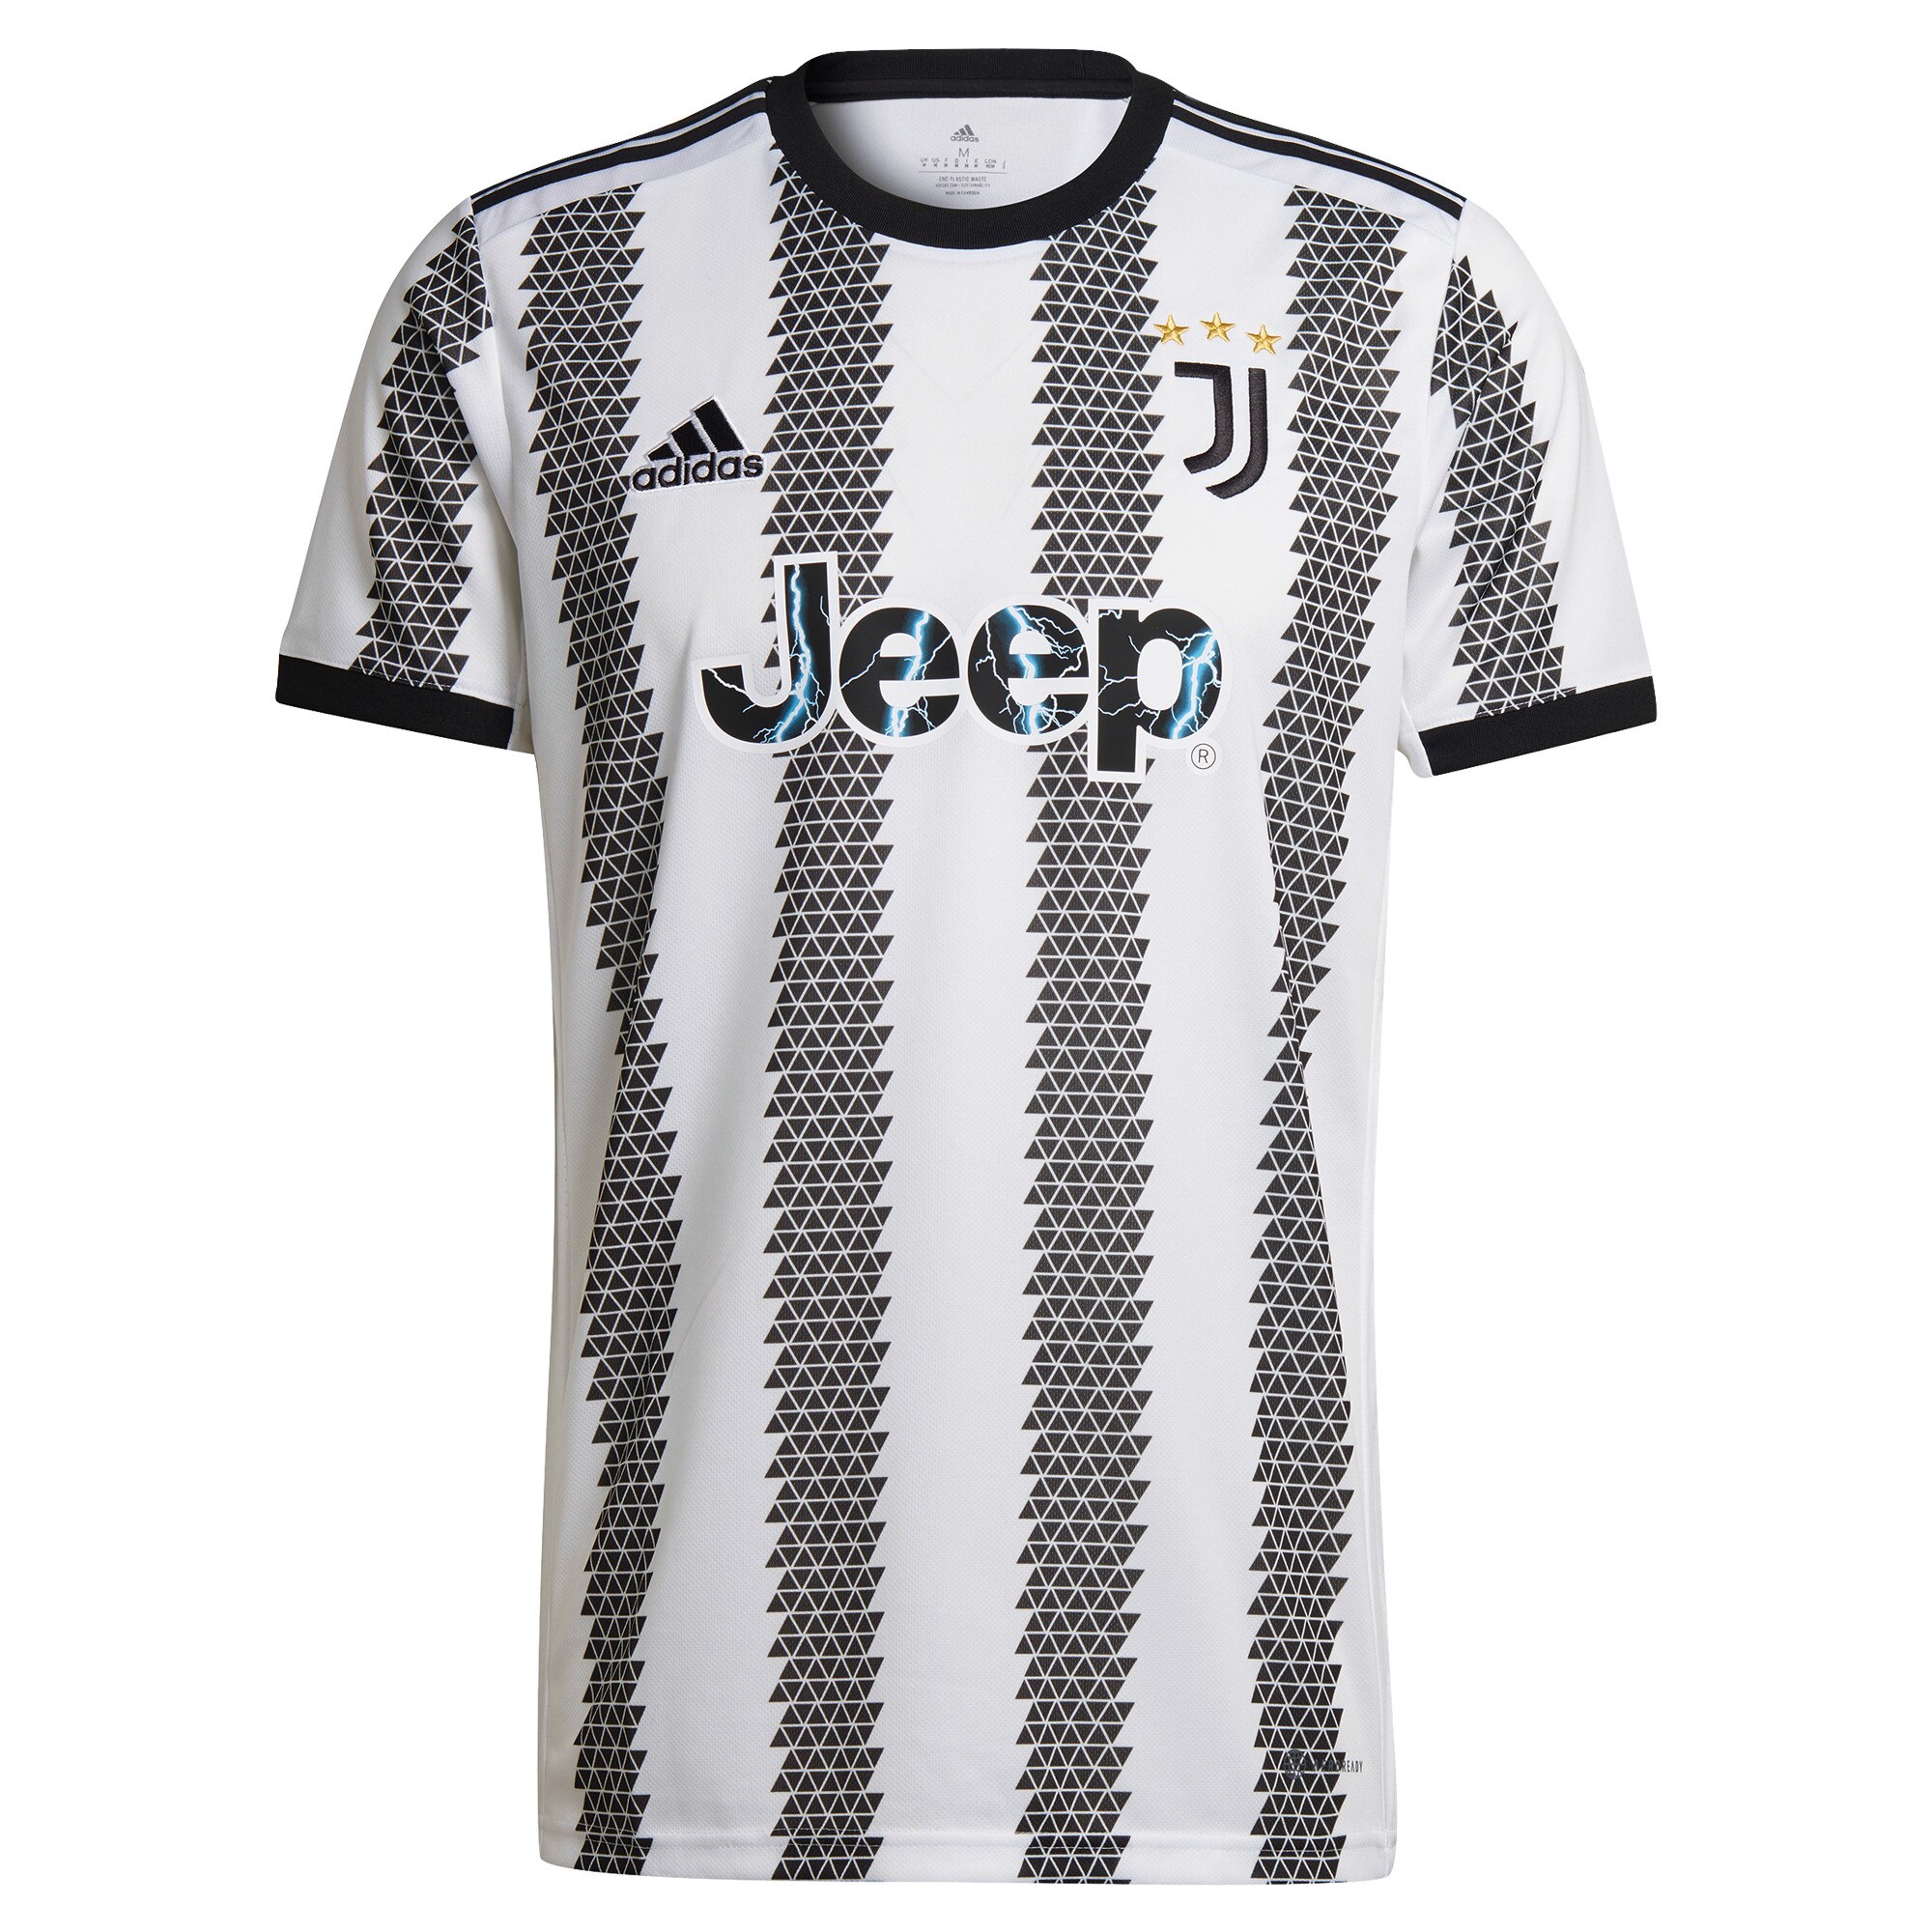 Juventus Home Shirt 2022/23 with Vlahovic 7 printing